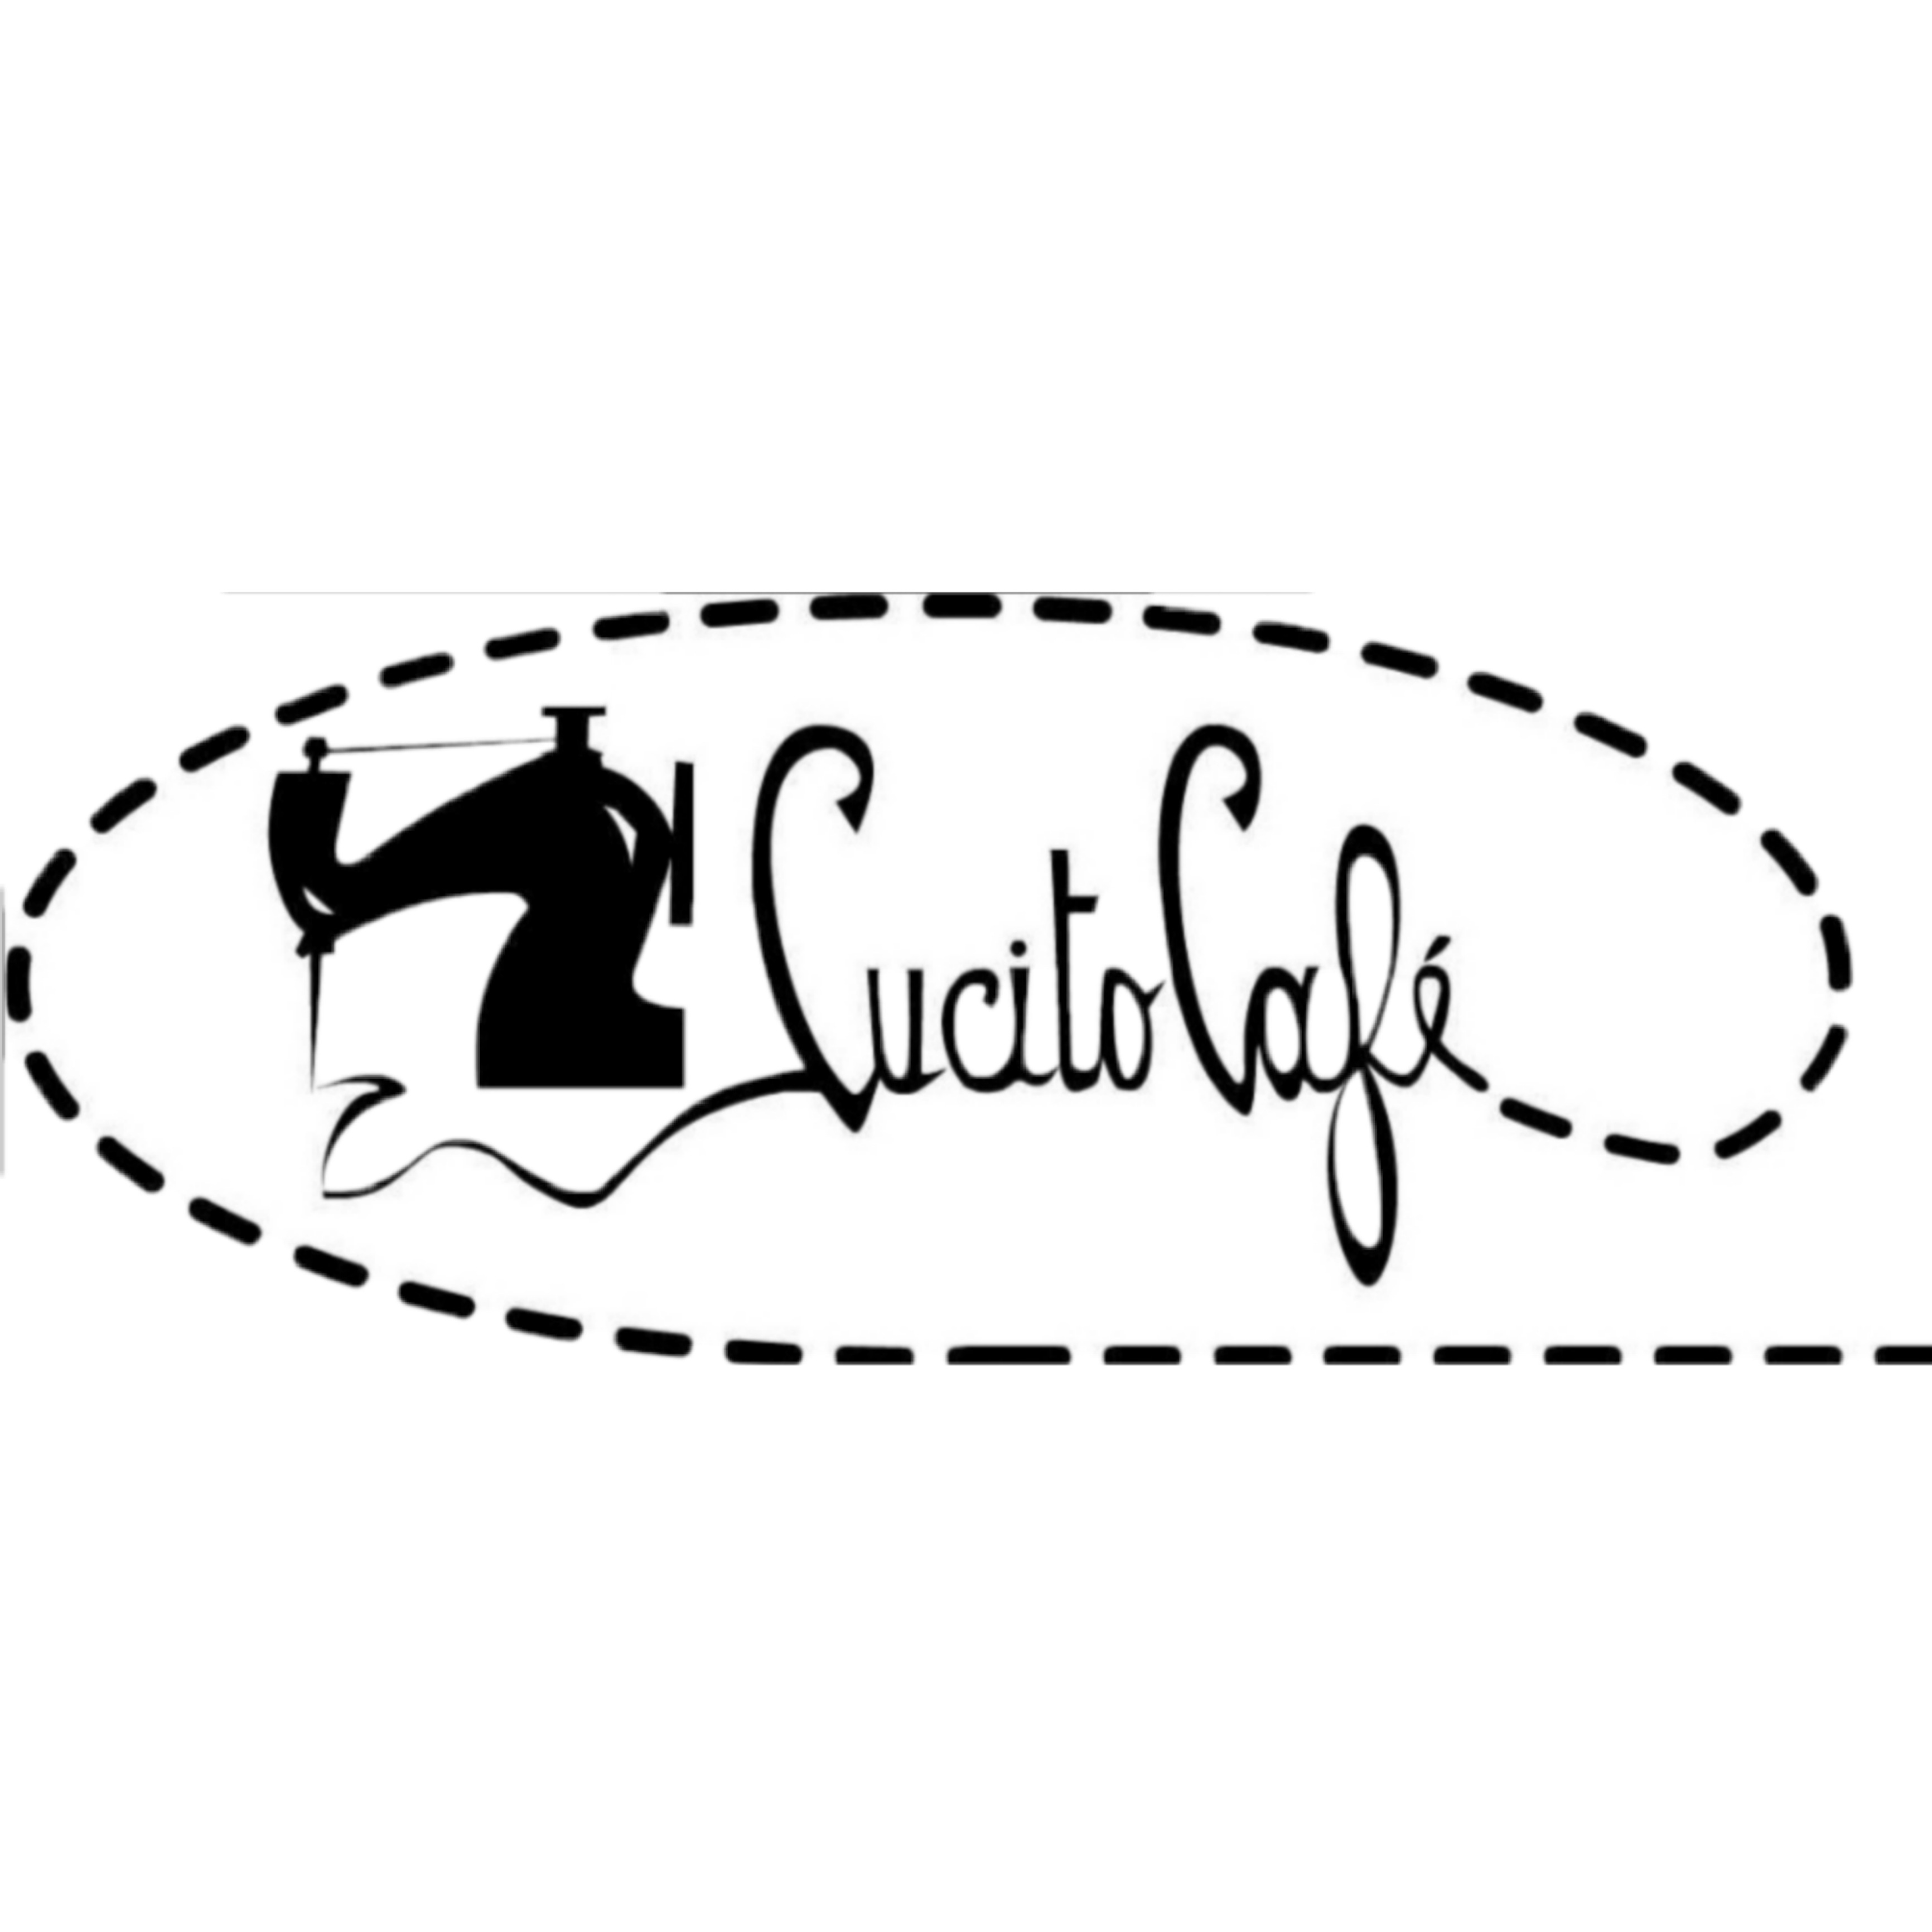 logo-cucitocafe-2.jpg